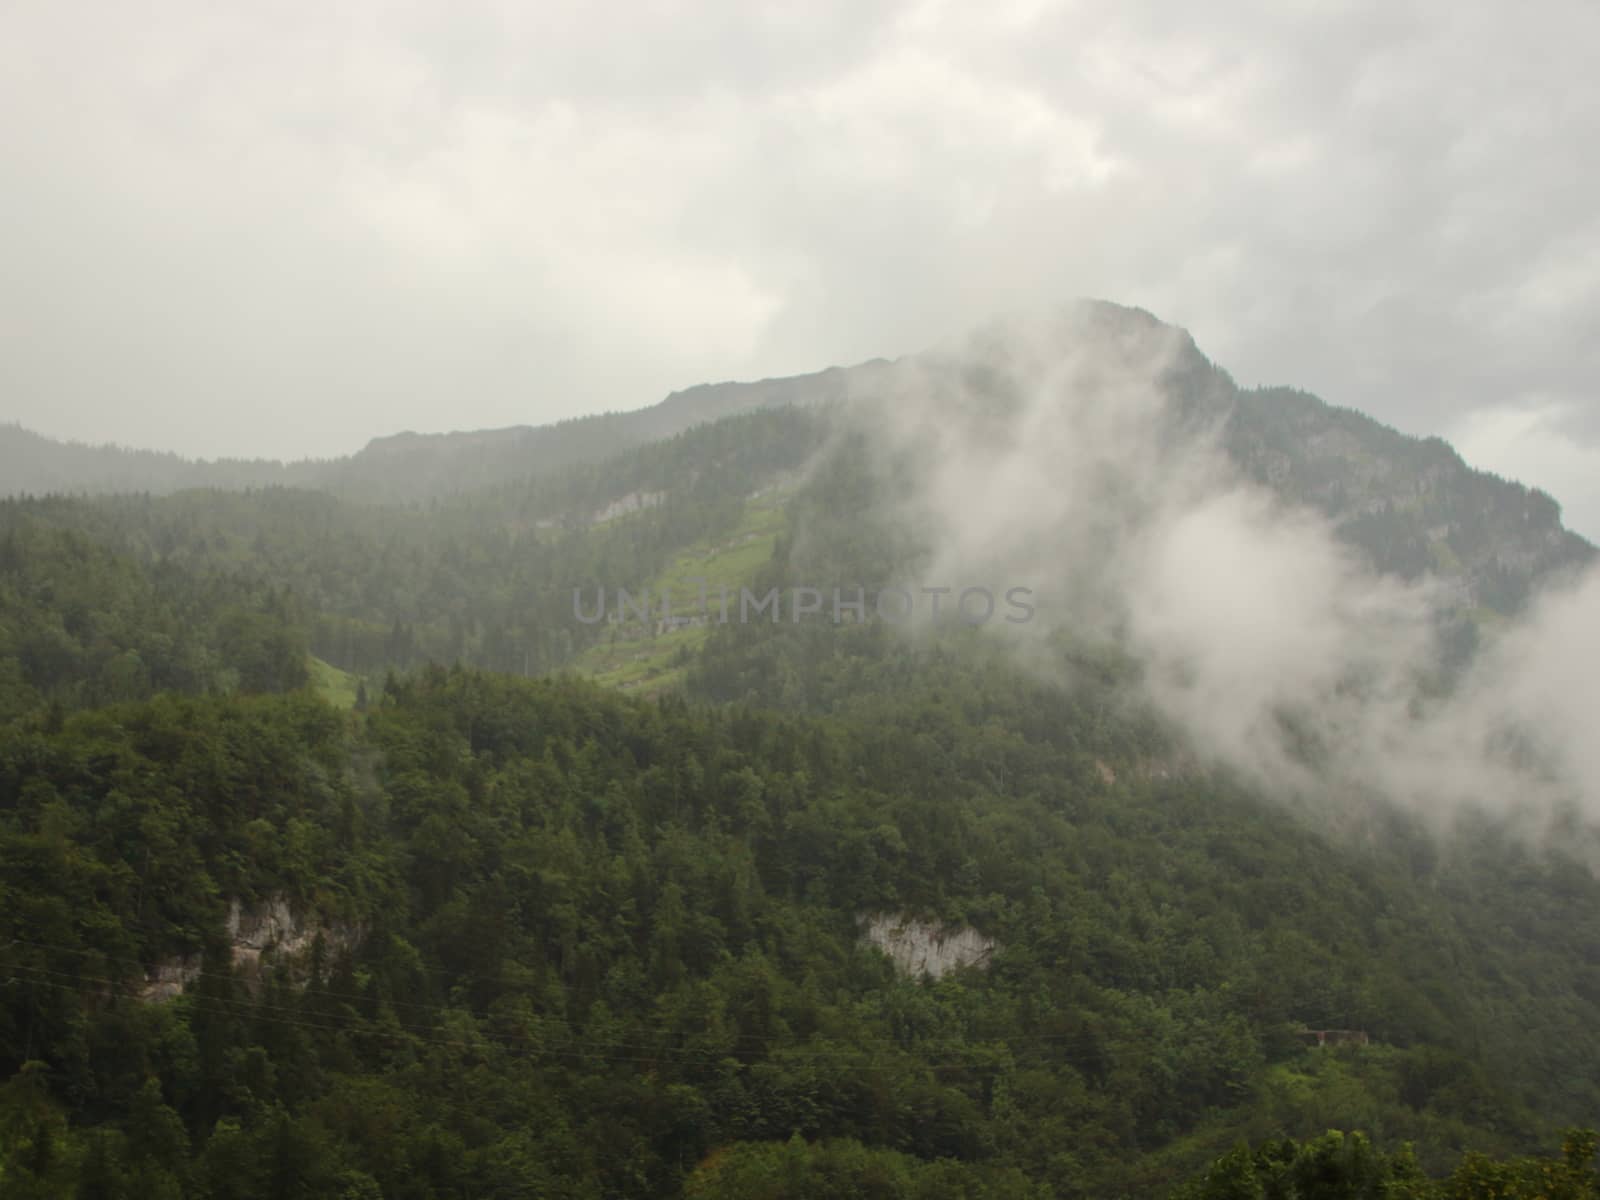 Cloudy Austrian Alps after Heavy Rainfall at Gollingen by HoleInTheBox